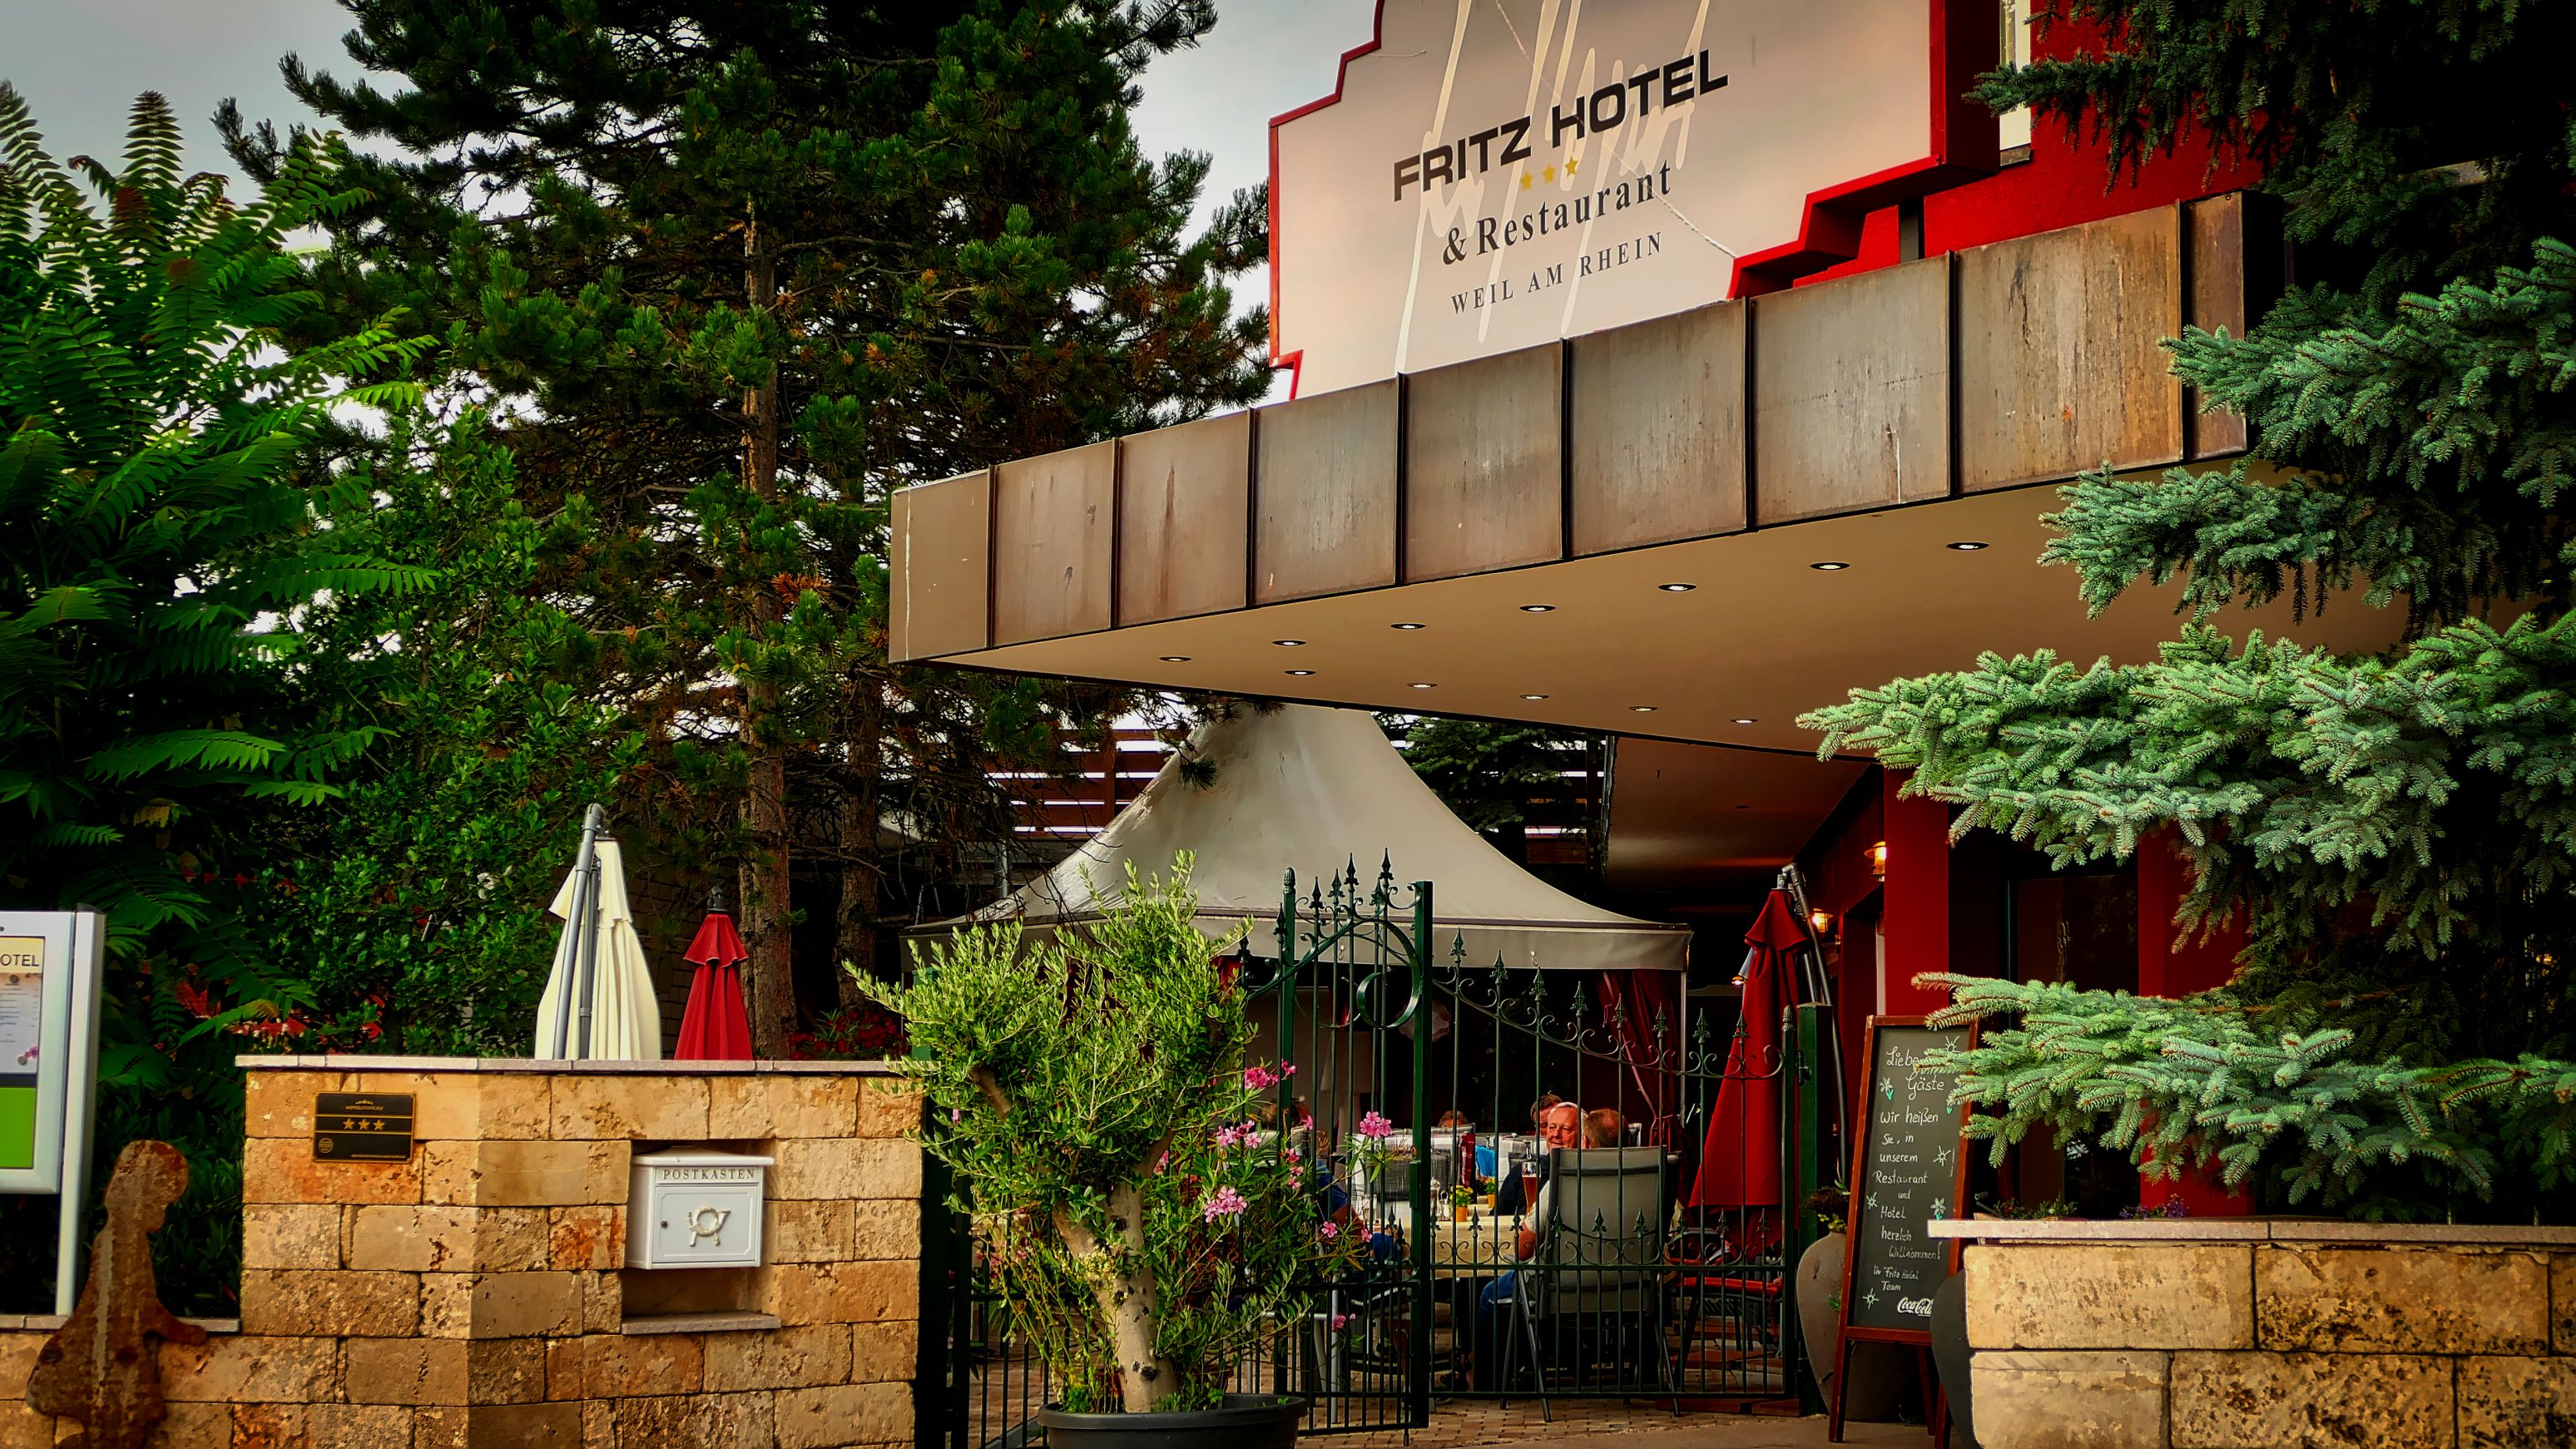 Fritz Hotel & Restaurant